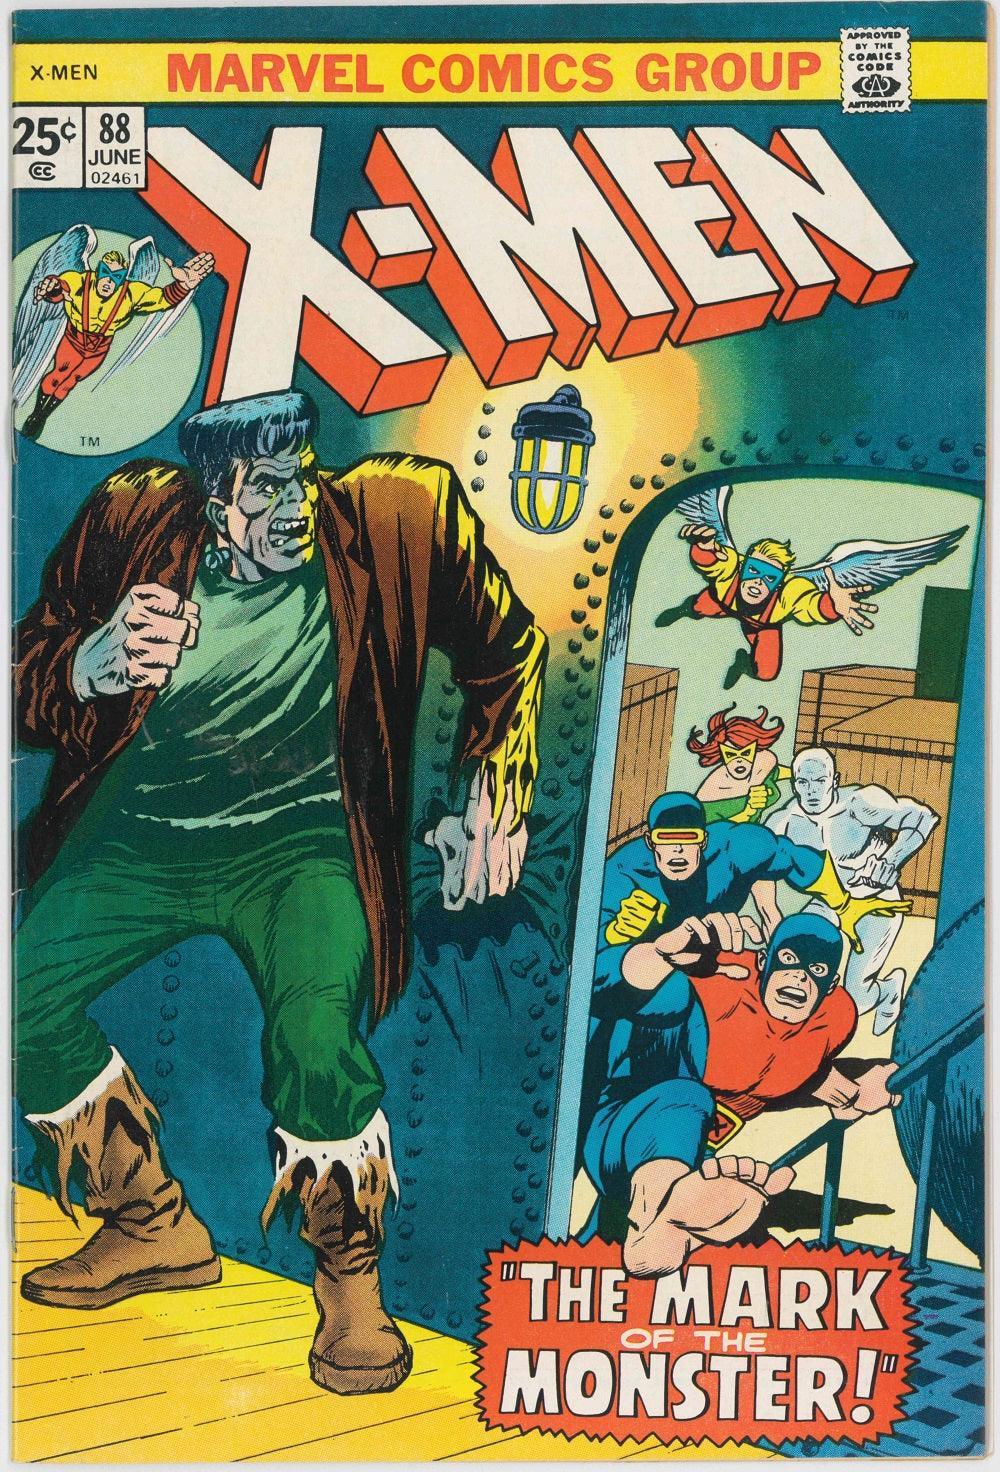 UNCANNY X-MEN (1963) #88 (VF) - Kings Comics